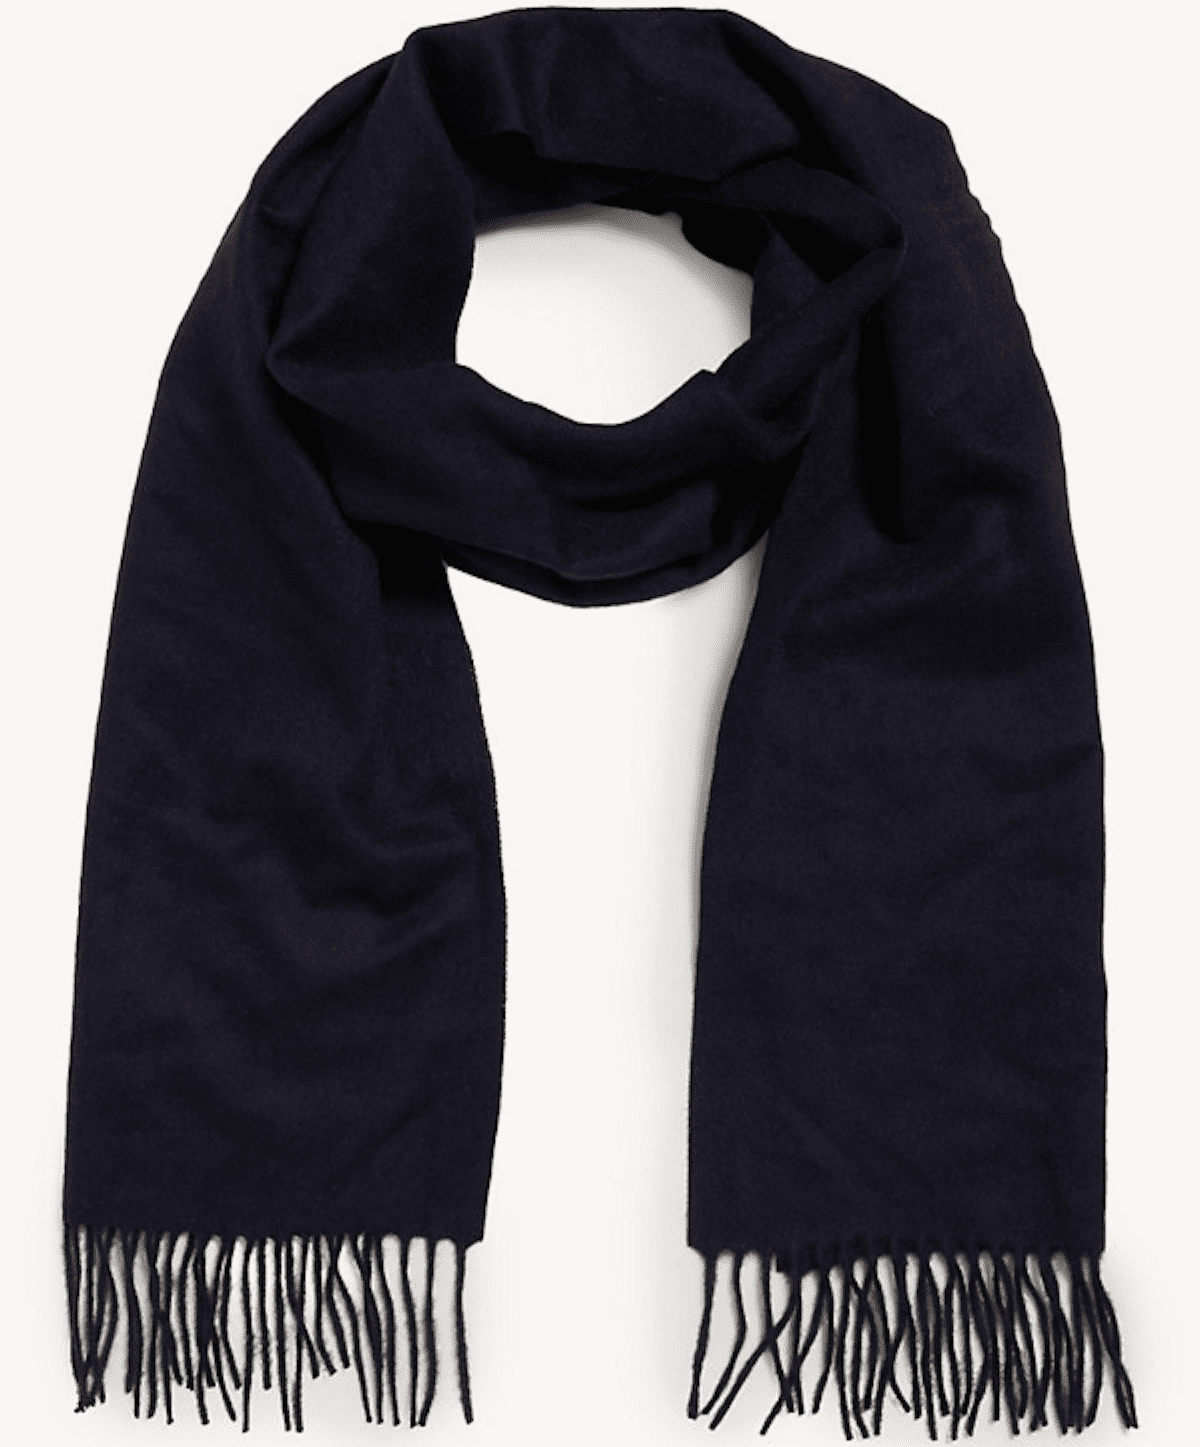 Navy blue cashmere scarf